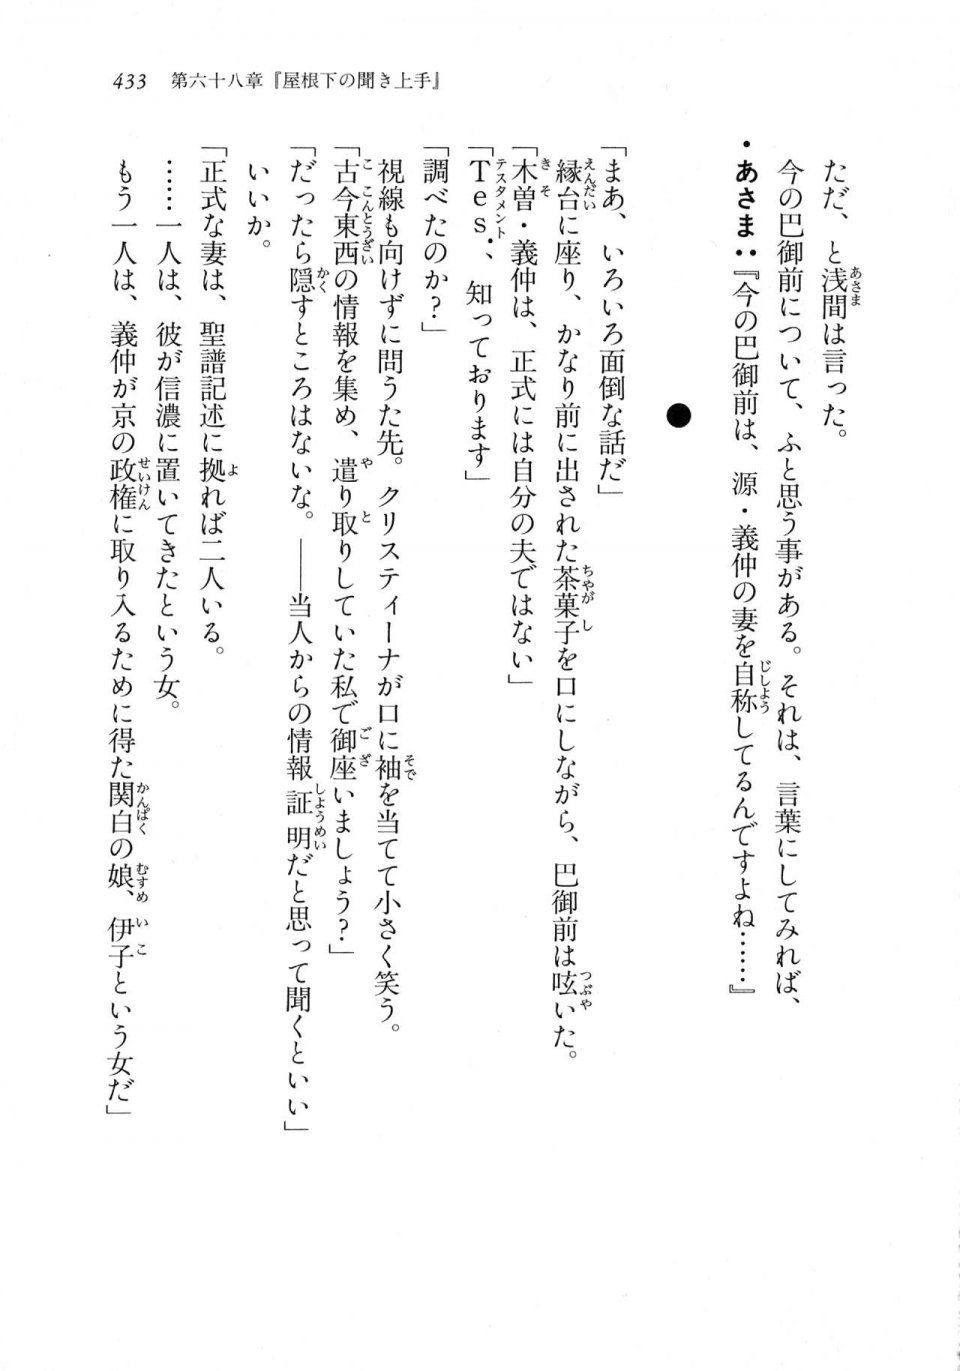 Kyoukai Senjou no Horizon LN Vol 18(7C) Part 1 - Photo #433